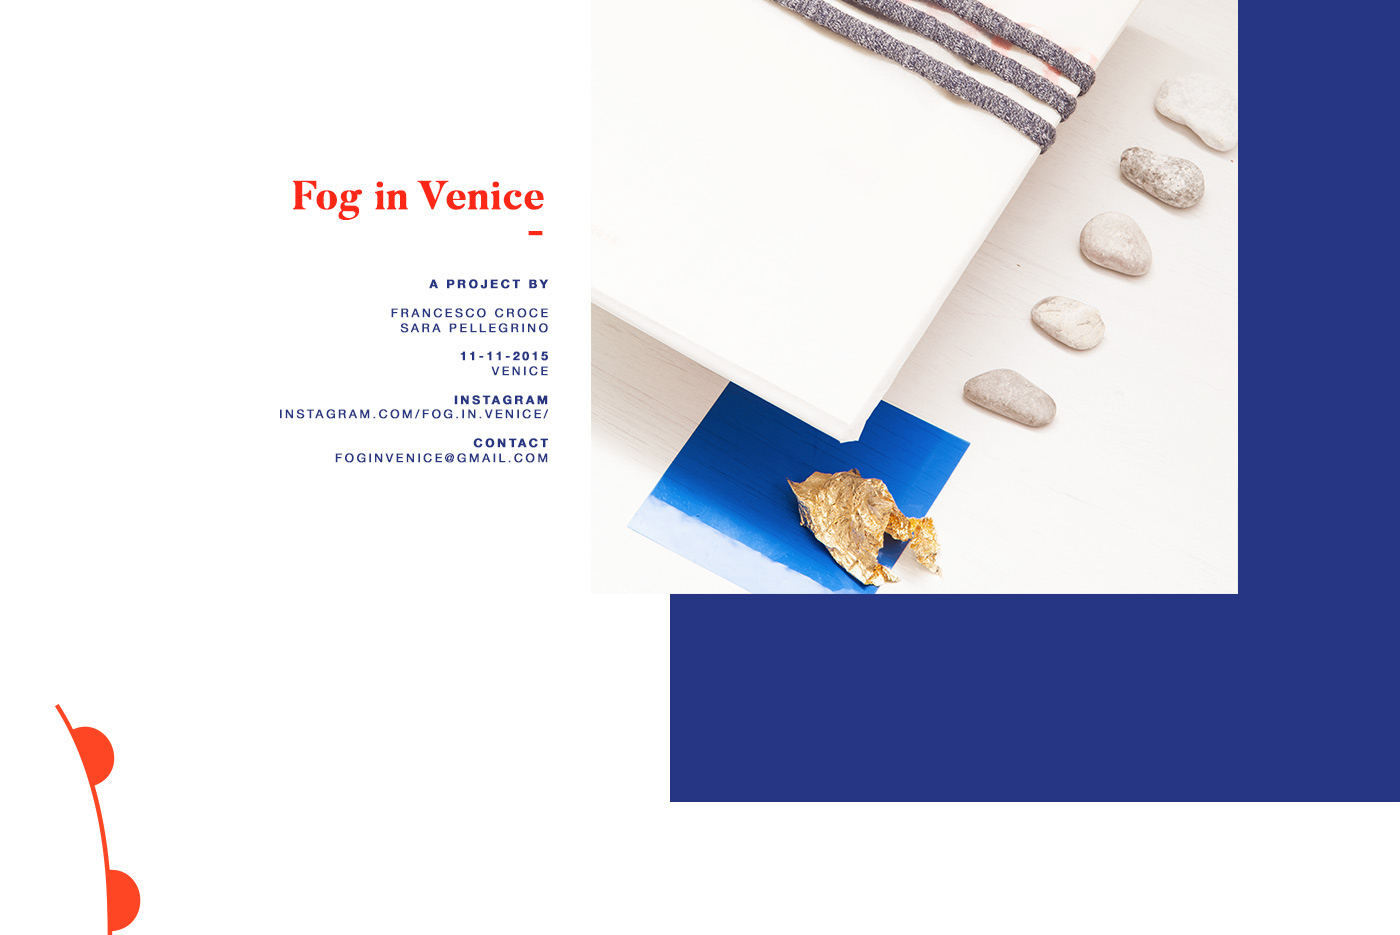 venezia Venice fog foggy nebbia surreal sea italia Italy instagram